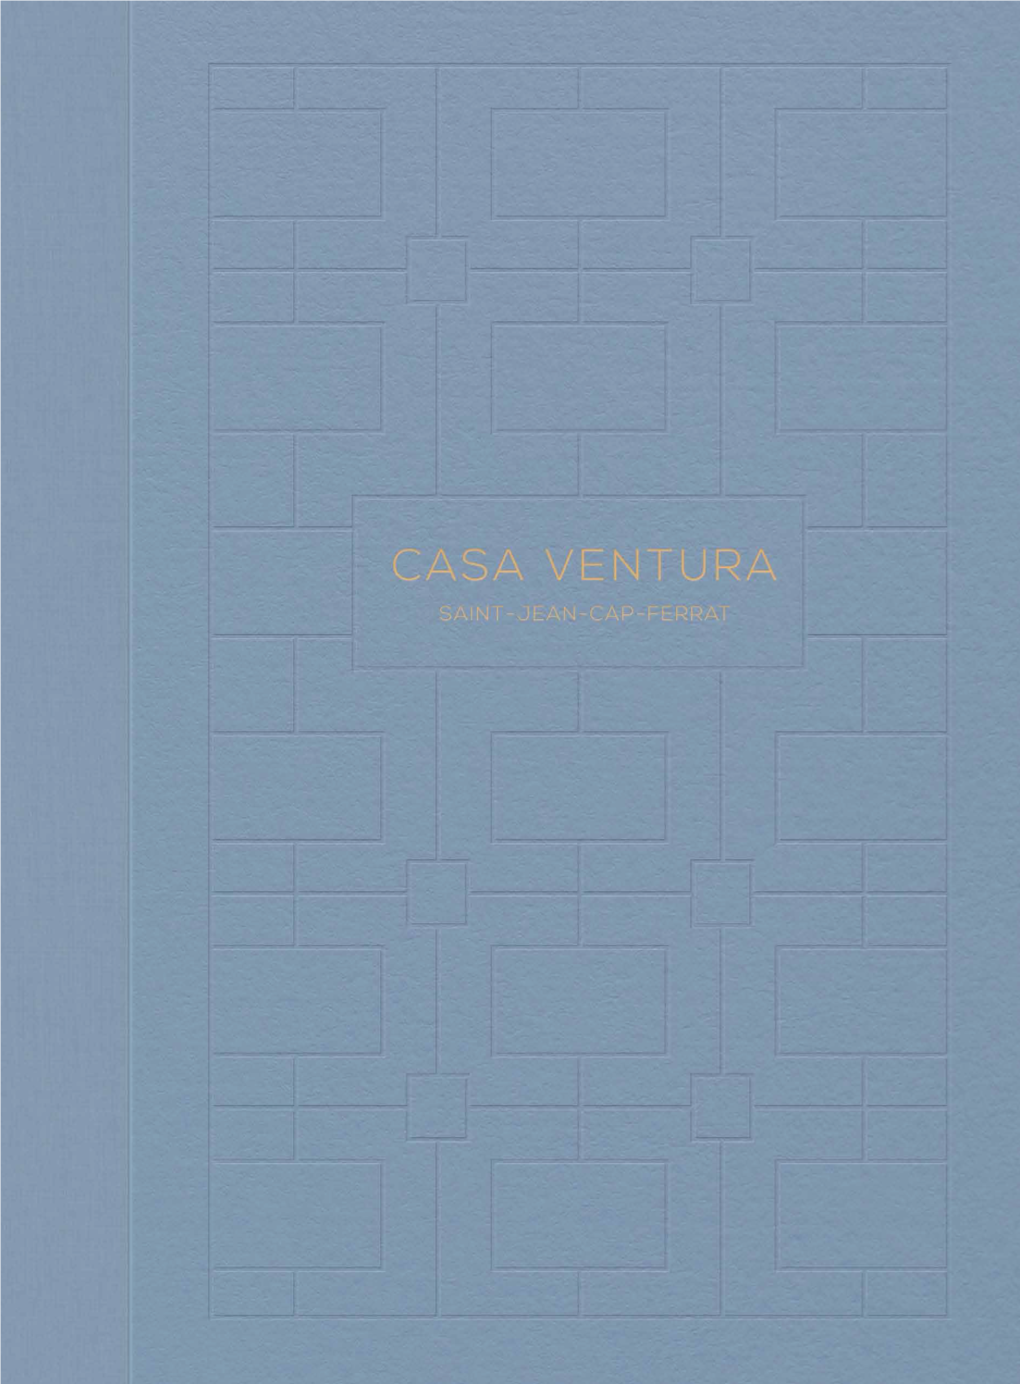 Casa Ventura Brochure